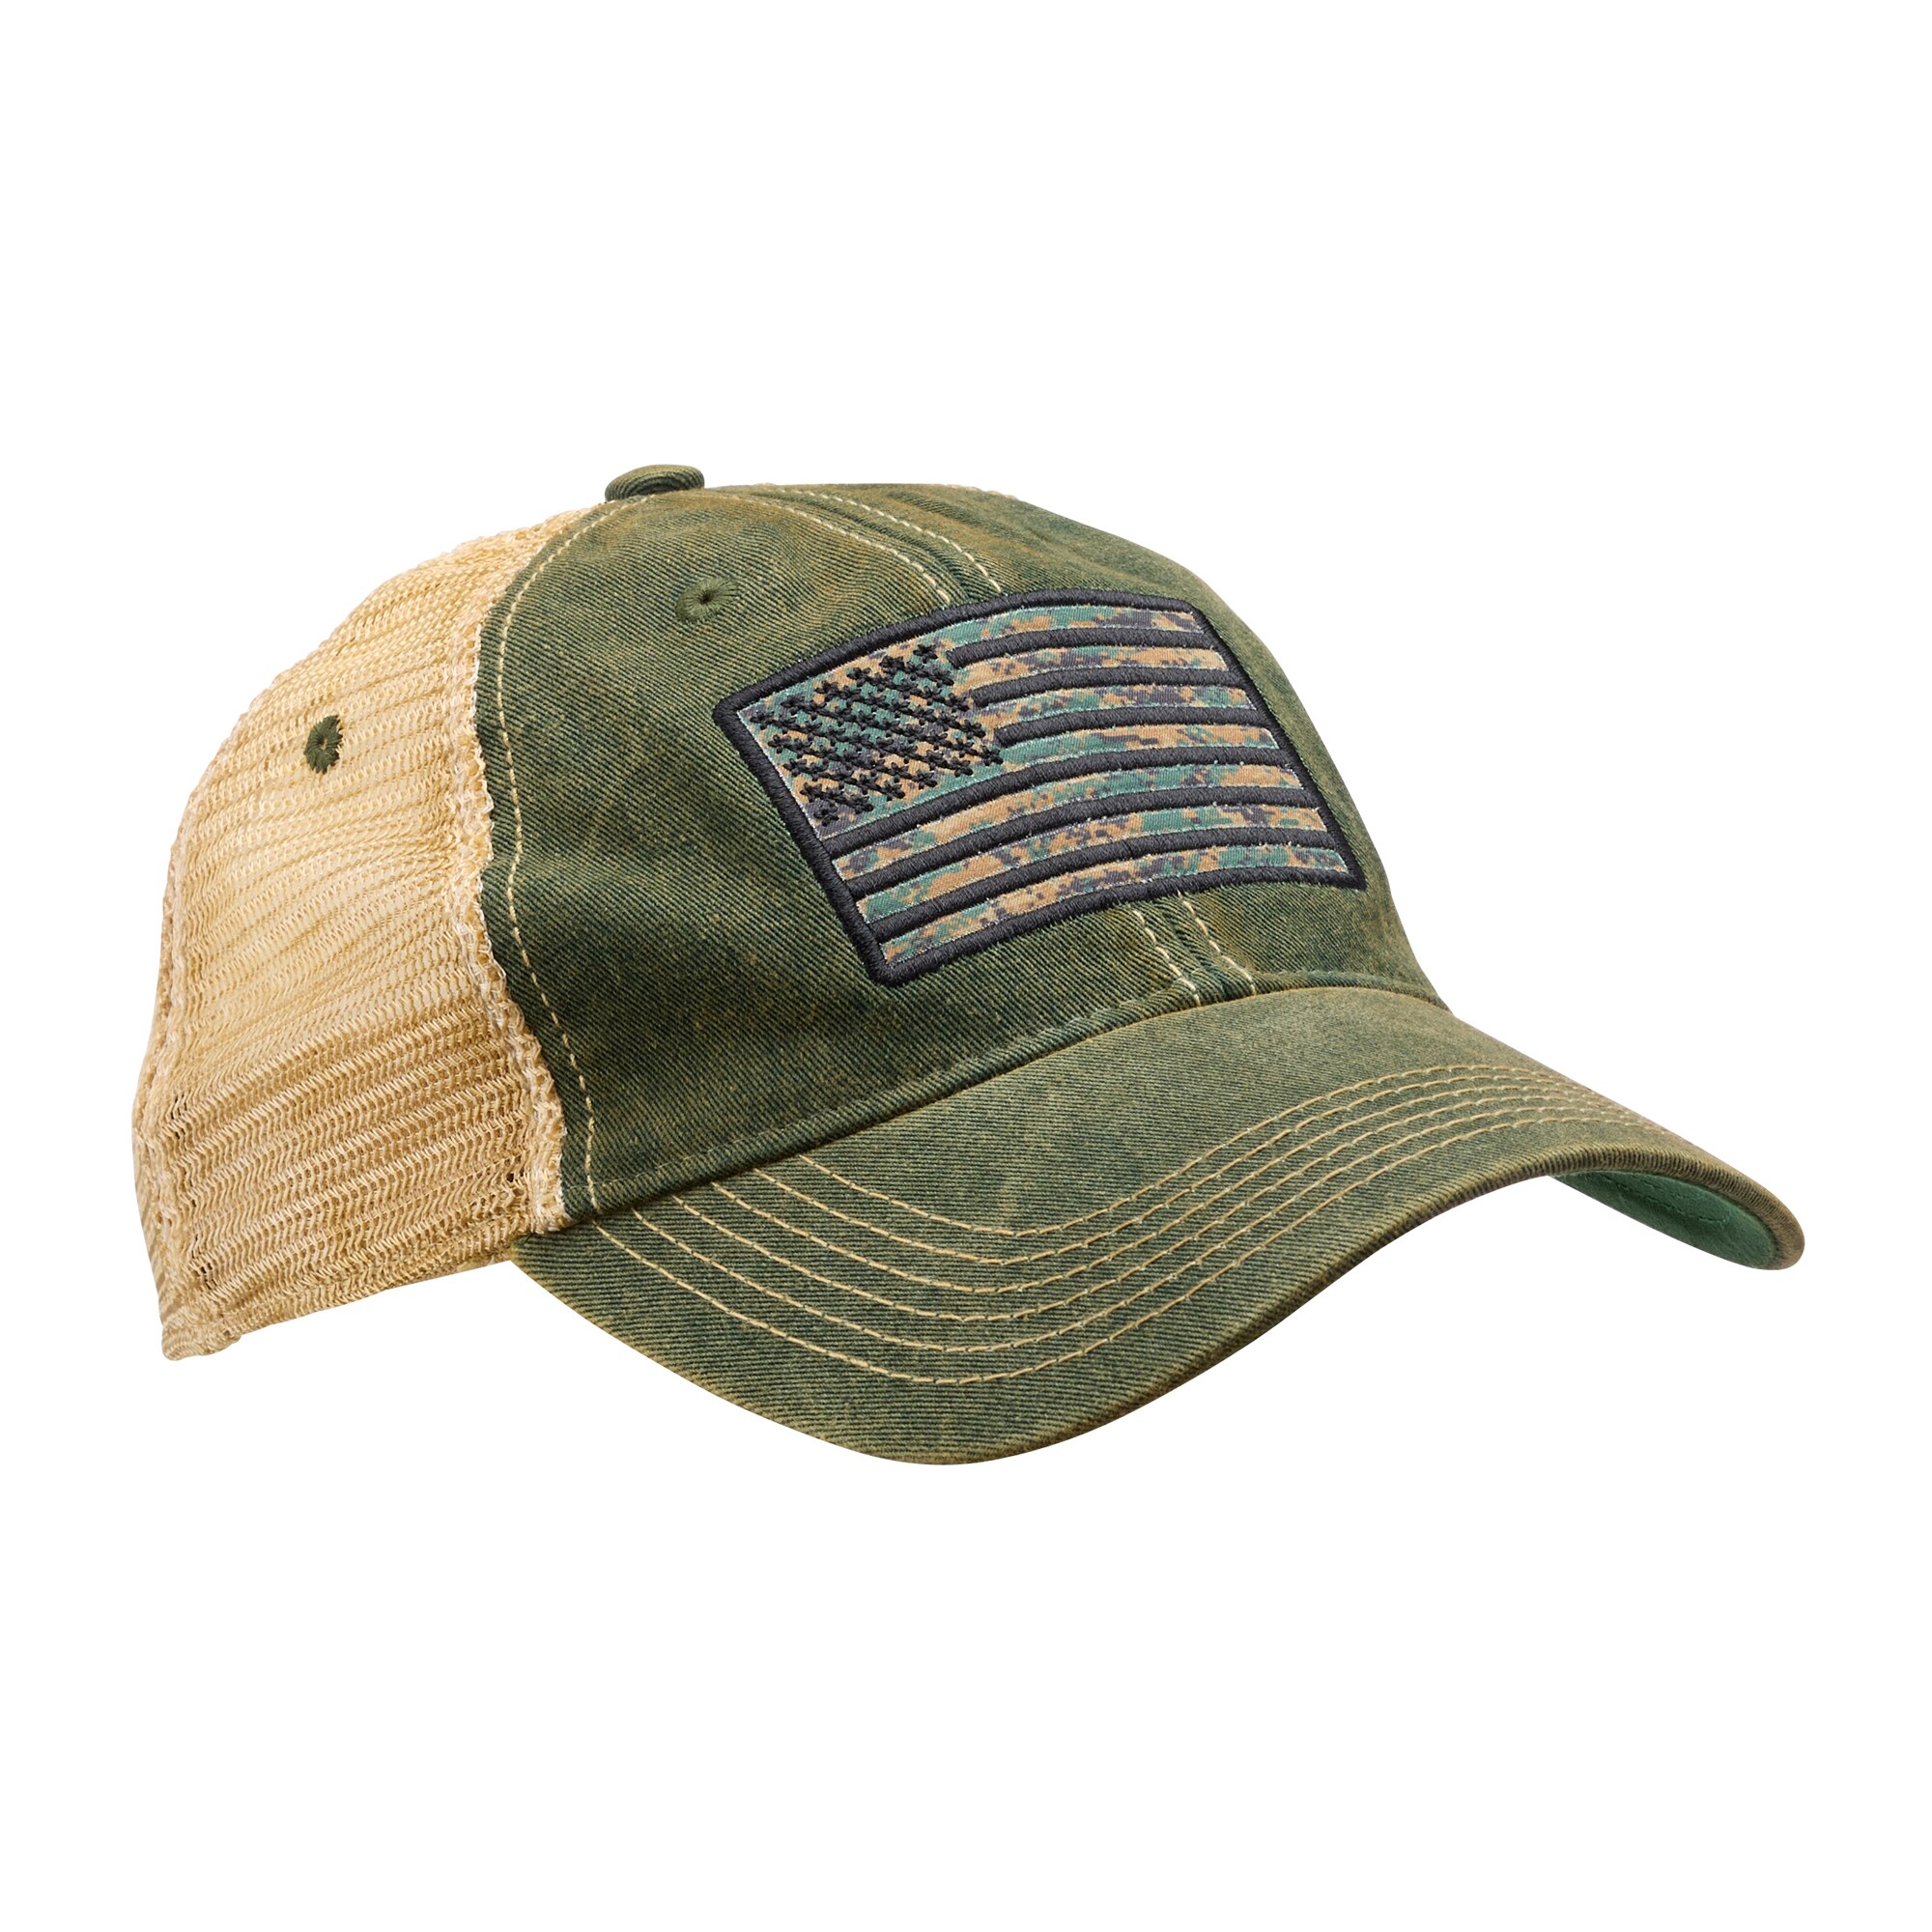 Purchase the 7.62 Design Cap USMC Woodland Marpat Flag olive by